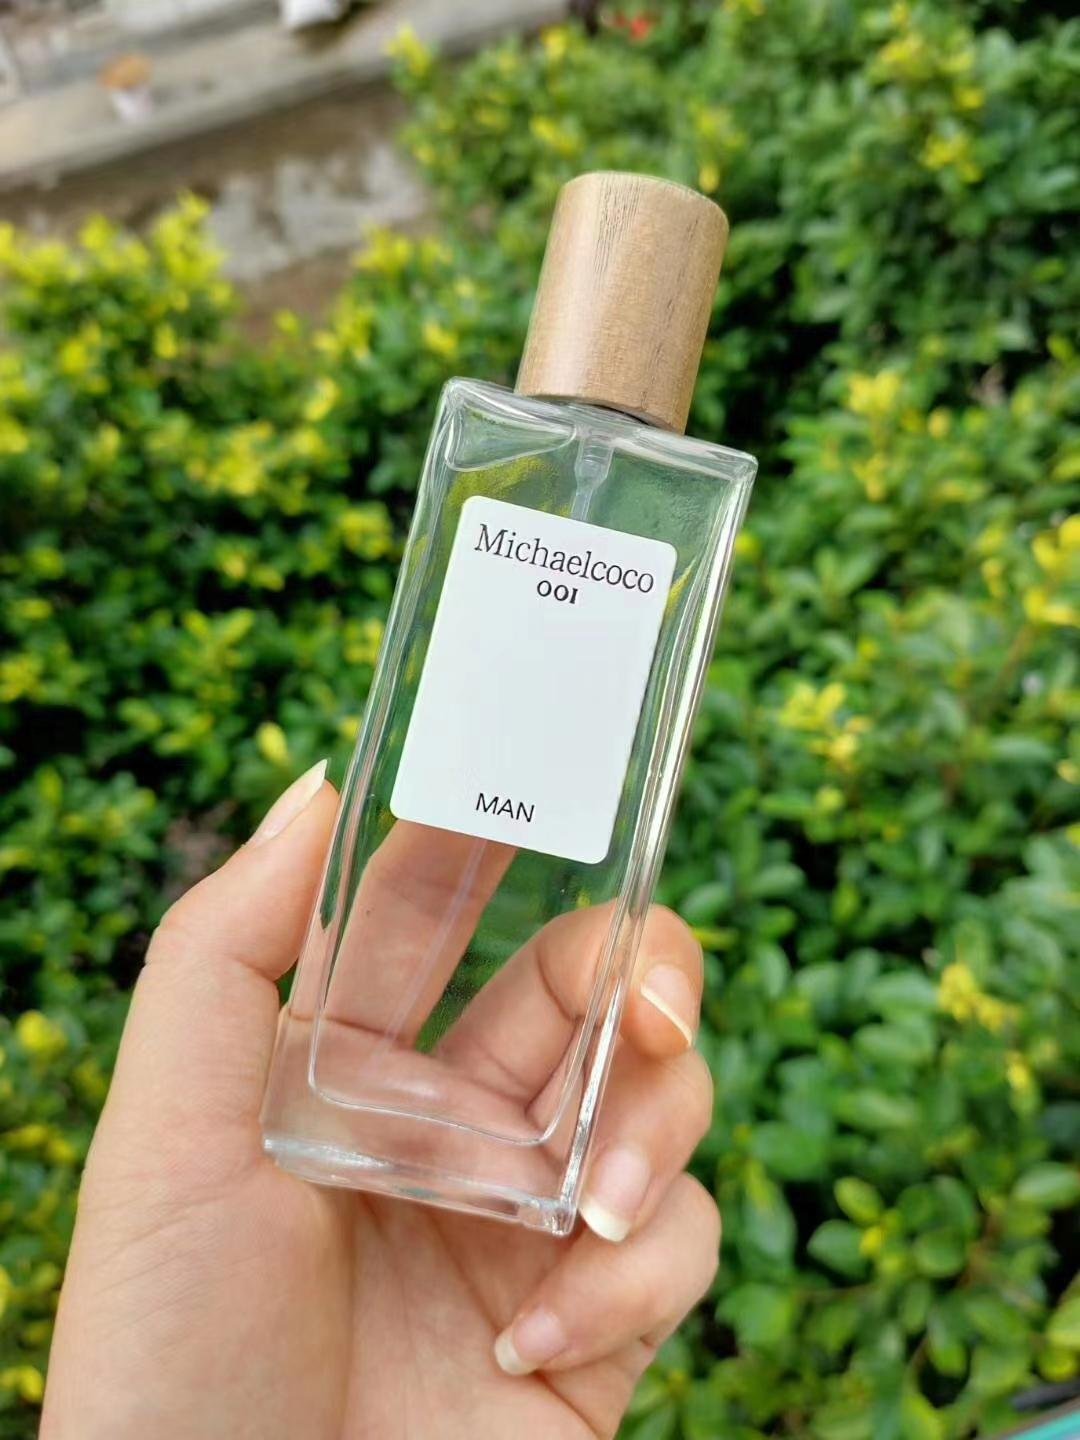 Michaelcoco Ooi 50ml for Men Perfume 2